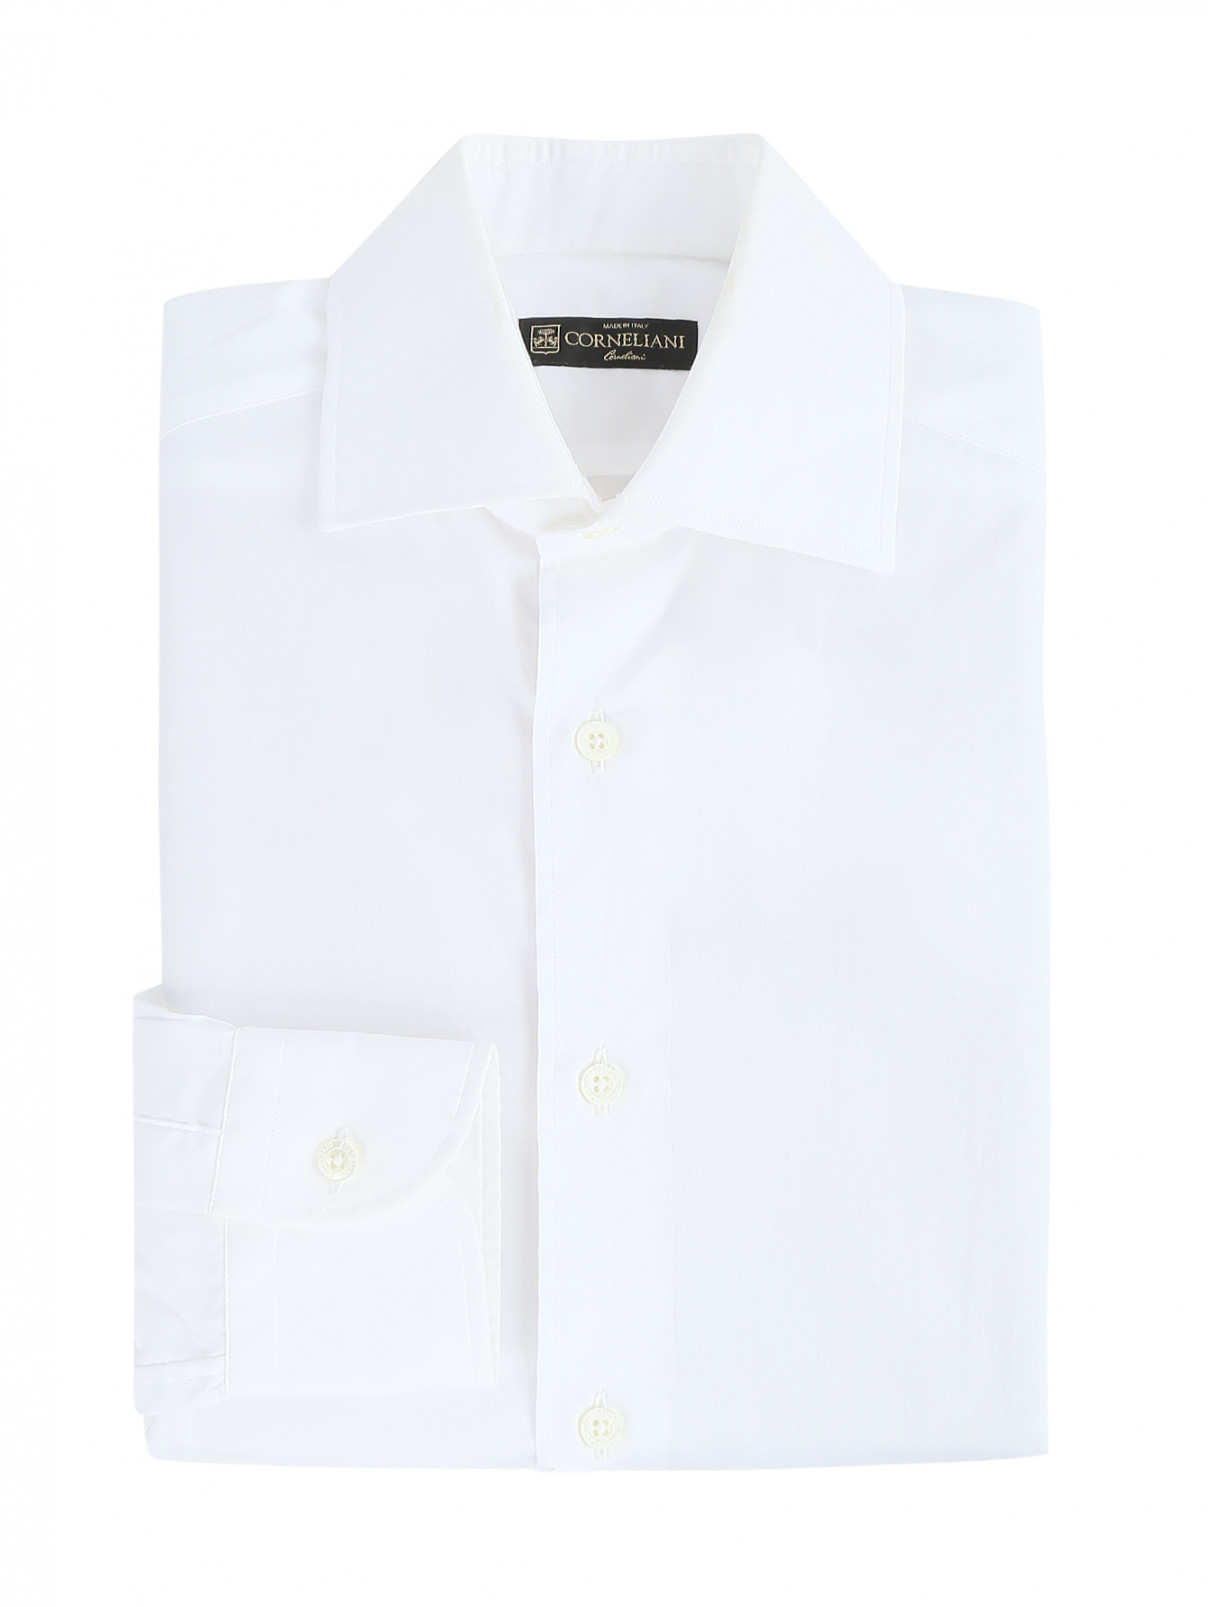 Рубашка из хлопка Corneliani  –  Общий вид  – Цвет:  Белый